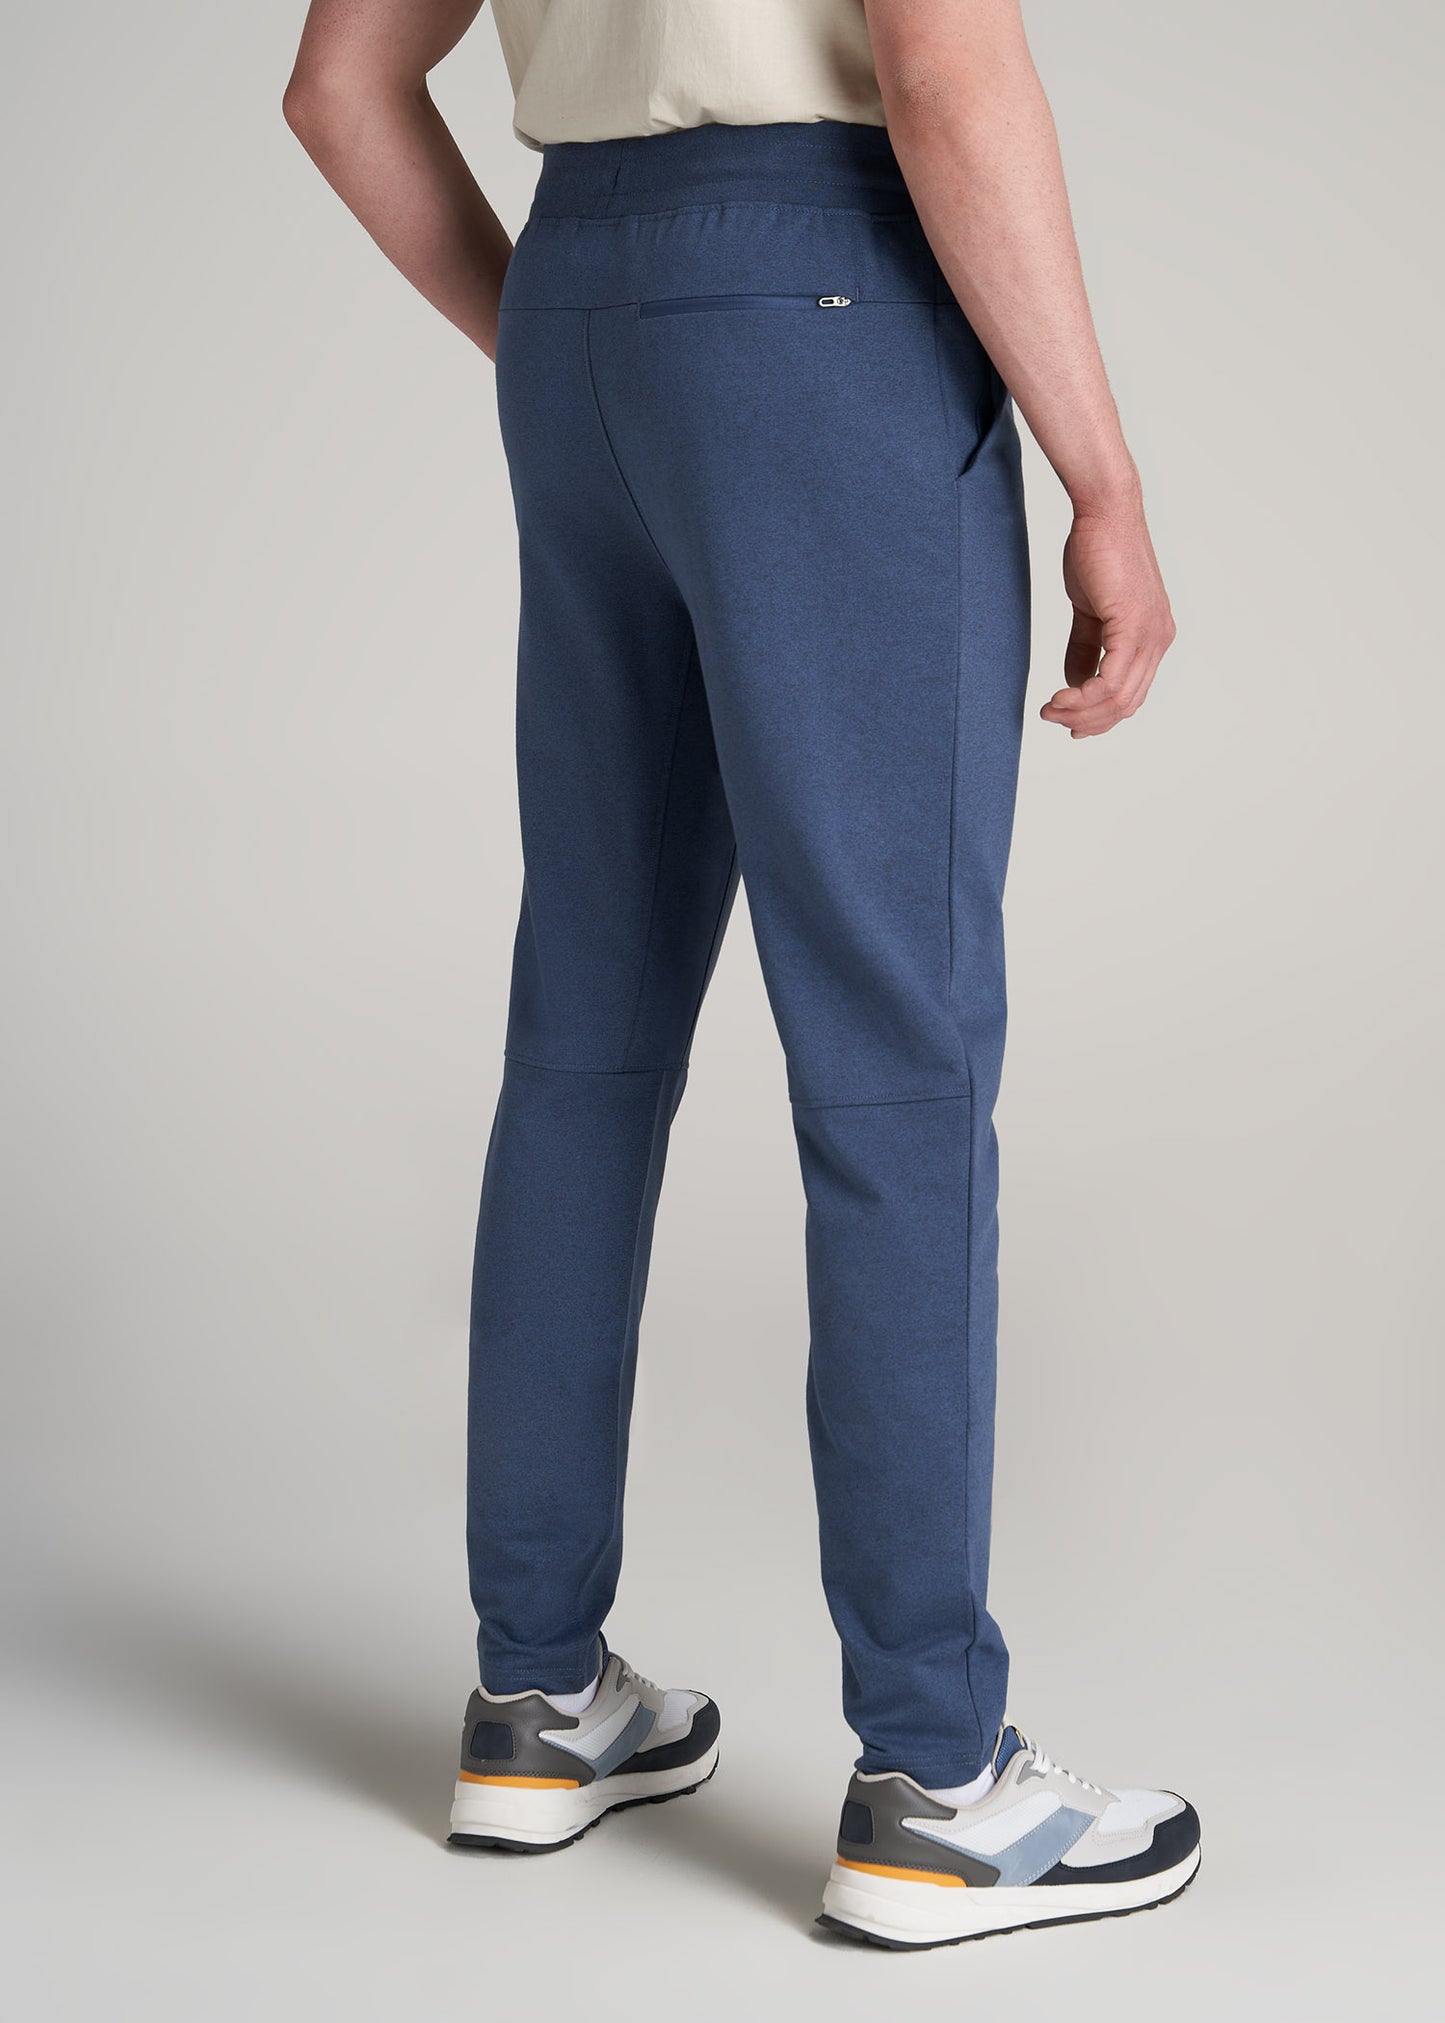 Lululemon Athletica Blue Active Pants Size 2 - 52% off